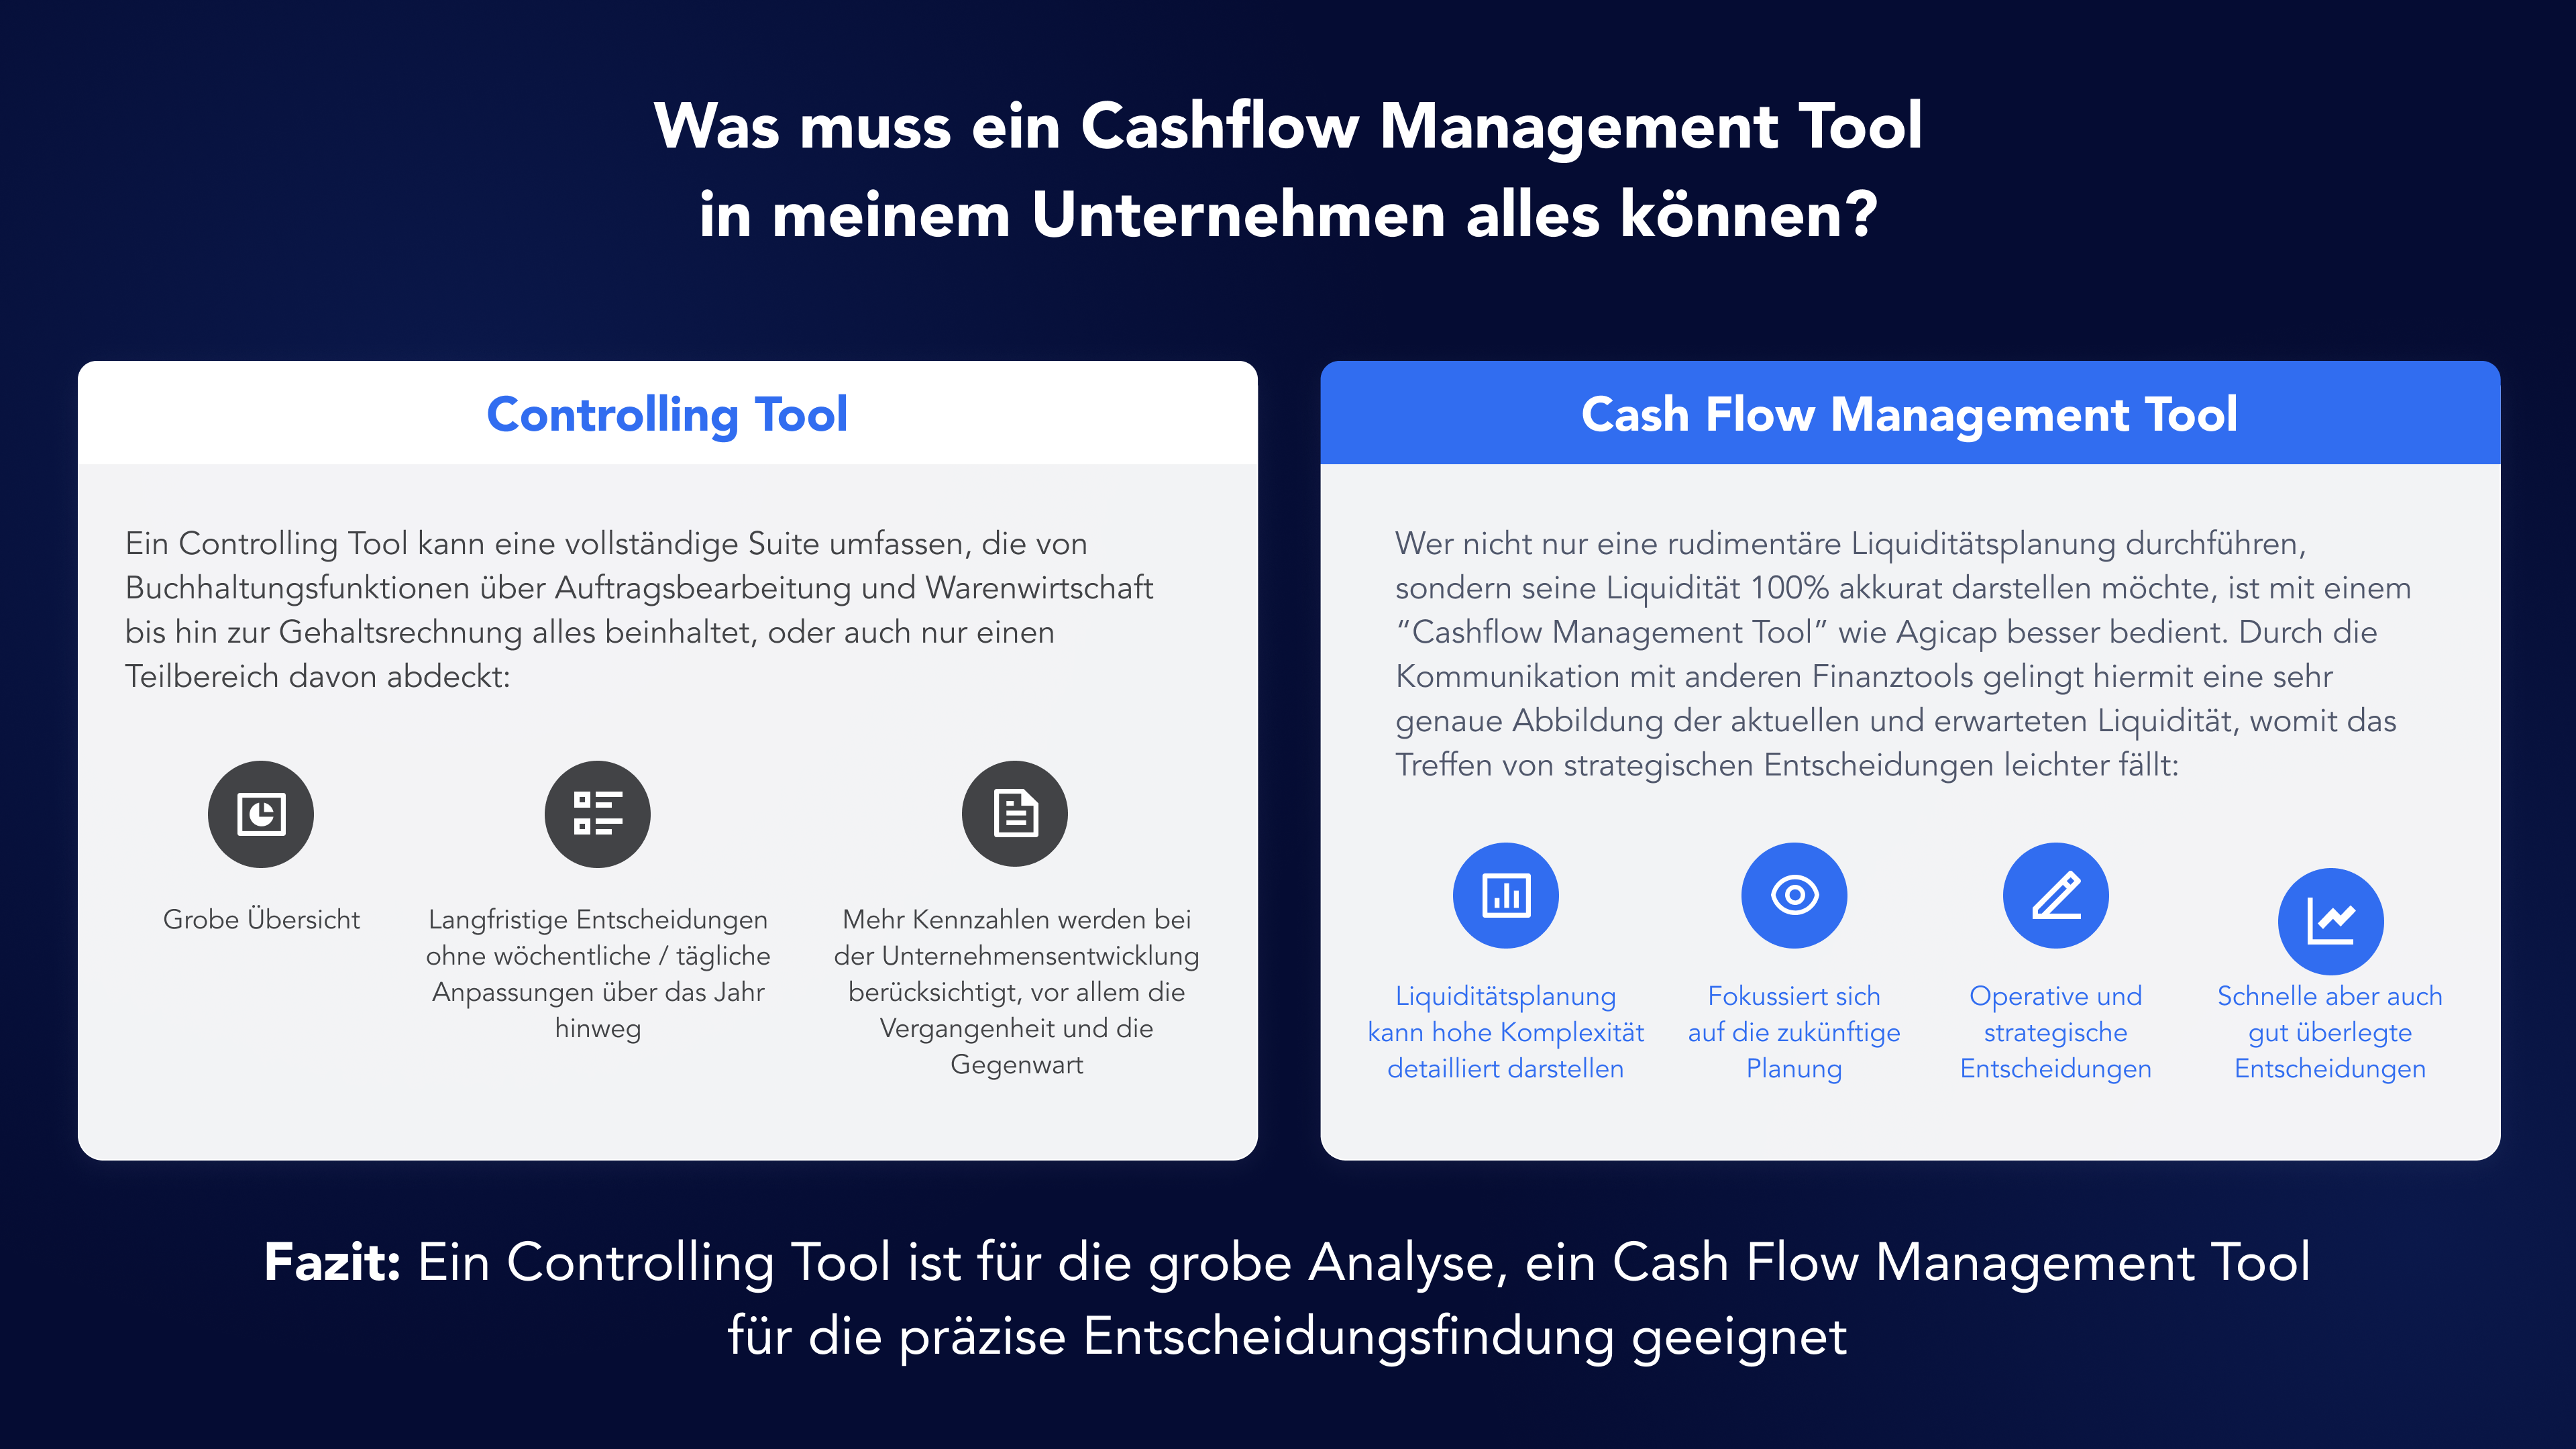 cash flow management tool vs controlling tool